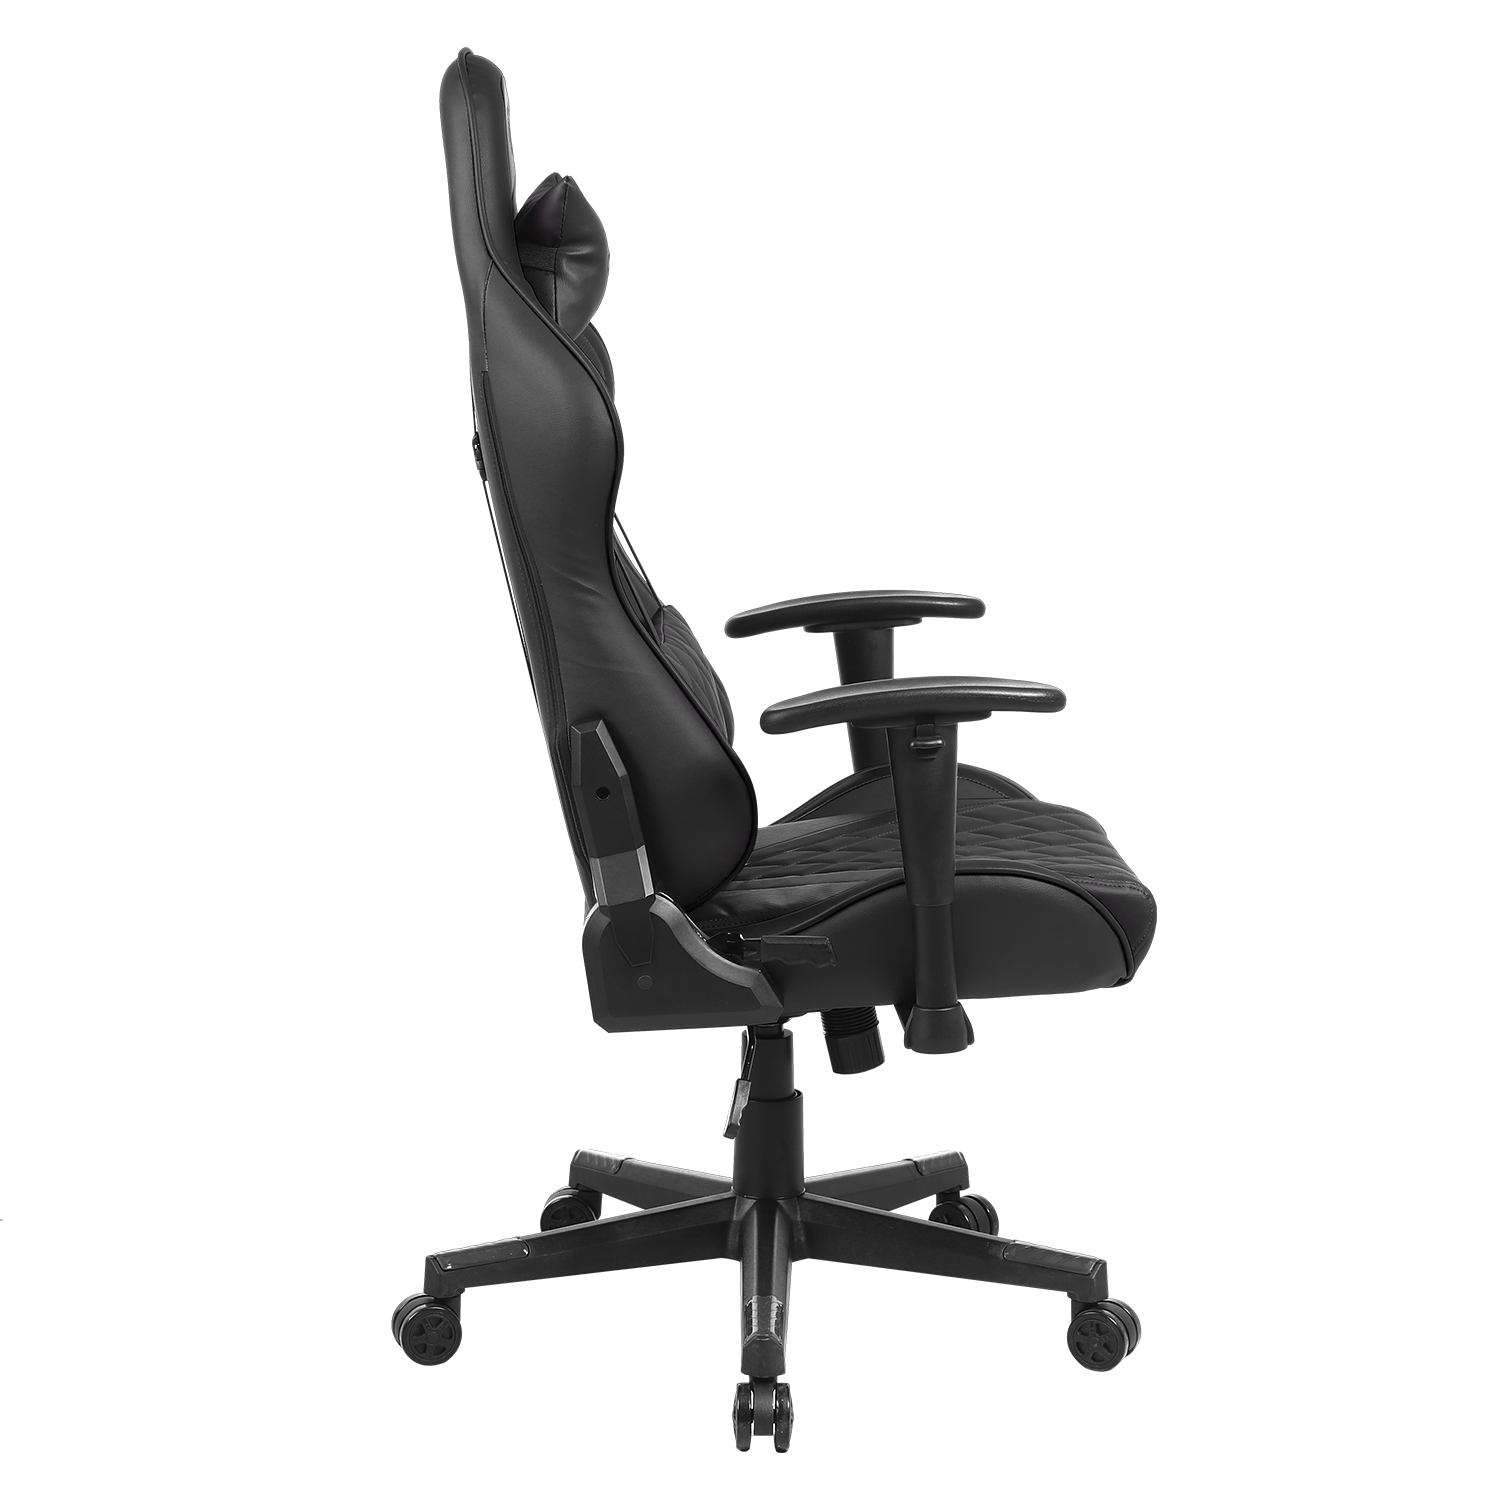 Cadeira Gamer Redragon Gaia C211-B - Preto